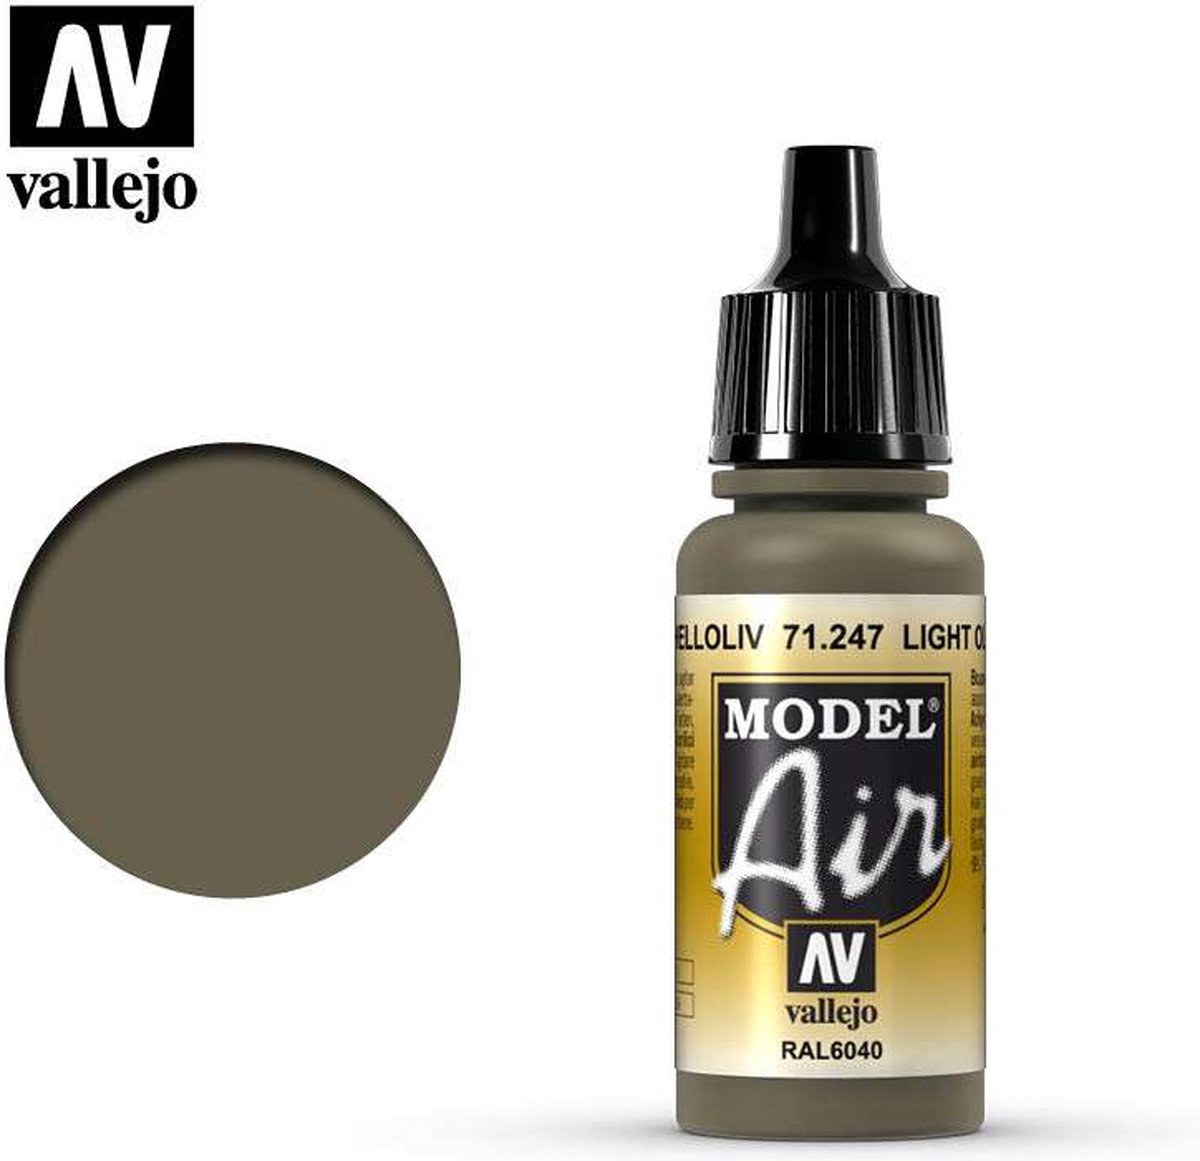 Afbeelding van product Vallejo 71247 Model Air Helloliv - Acryl Verf flesje